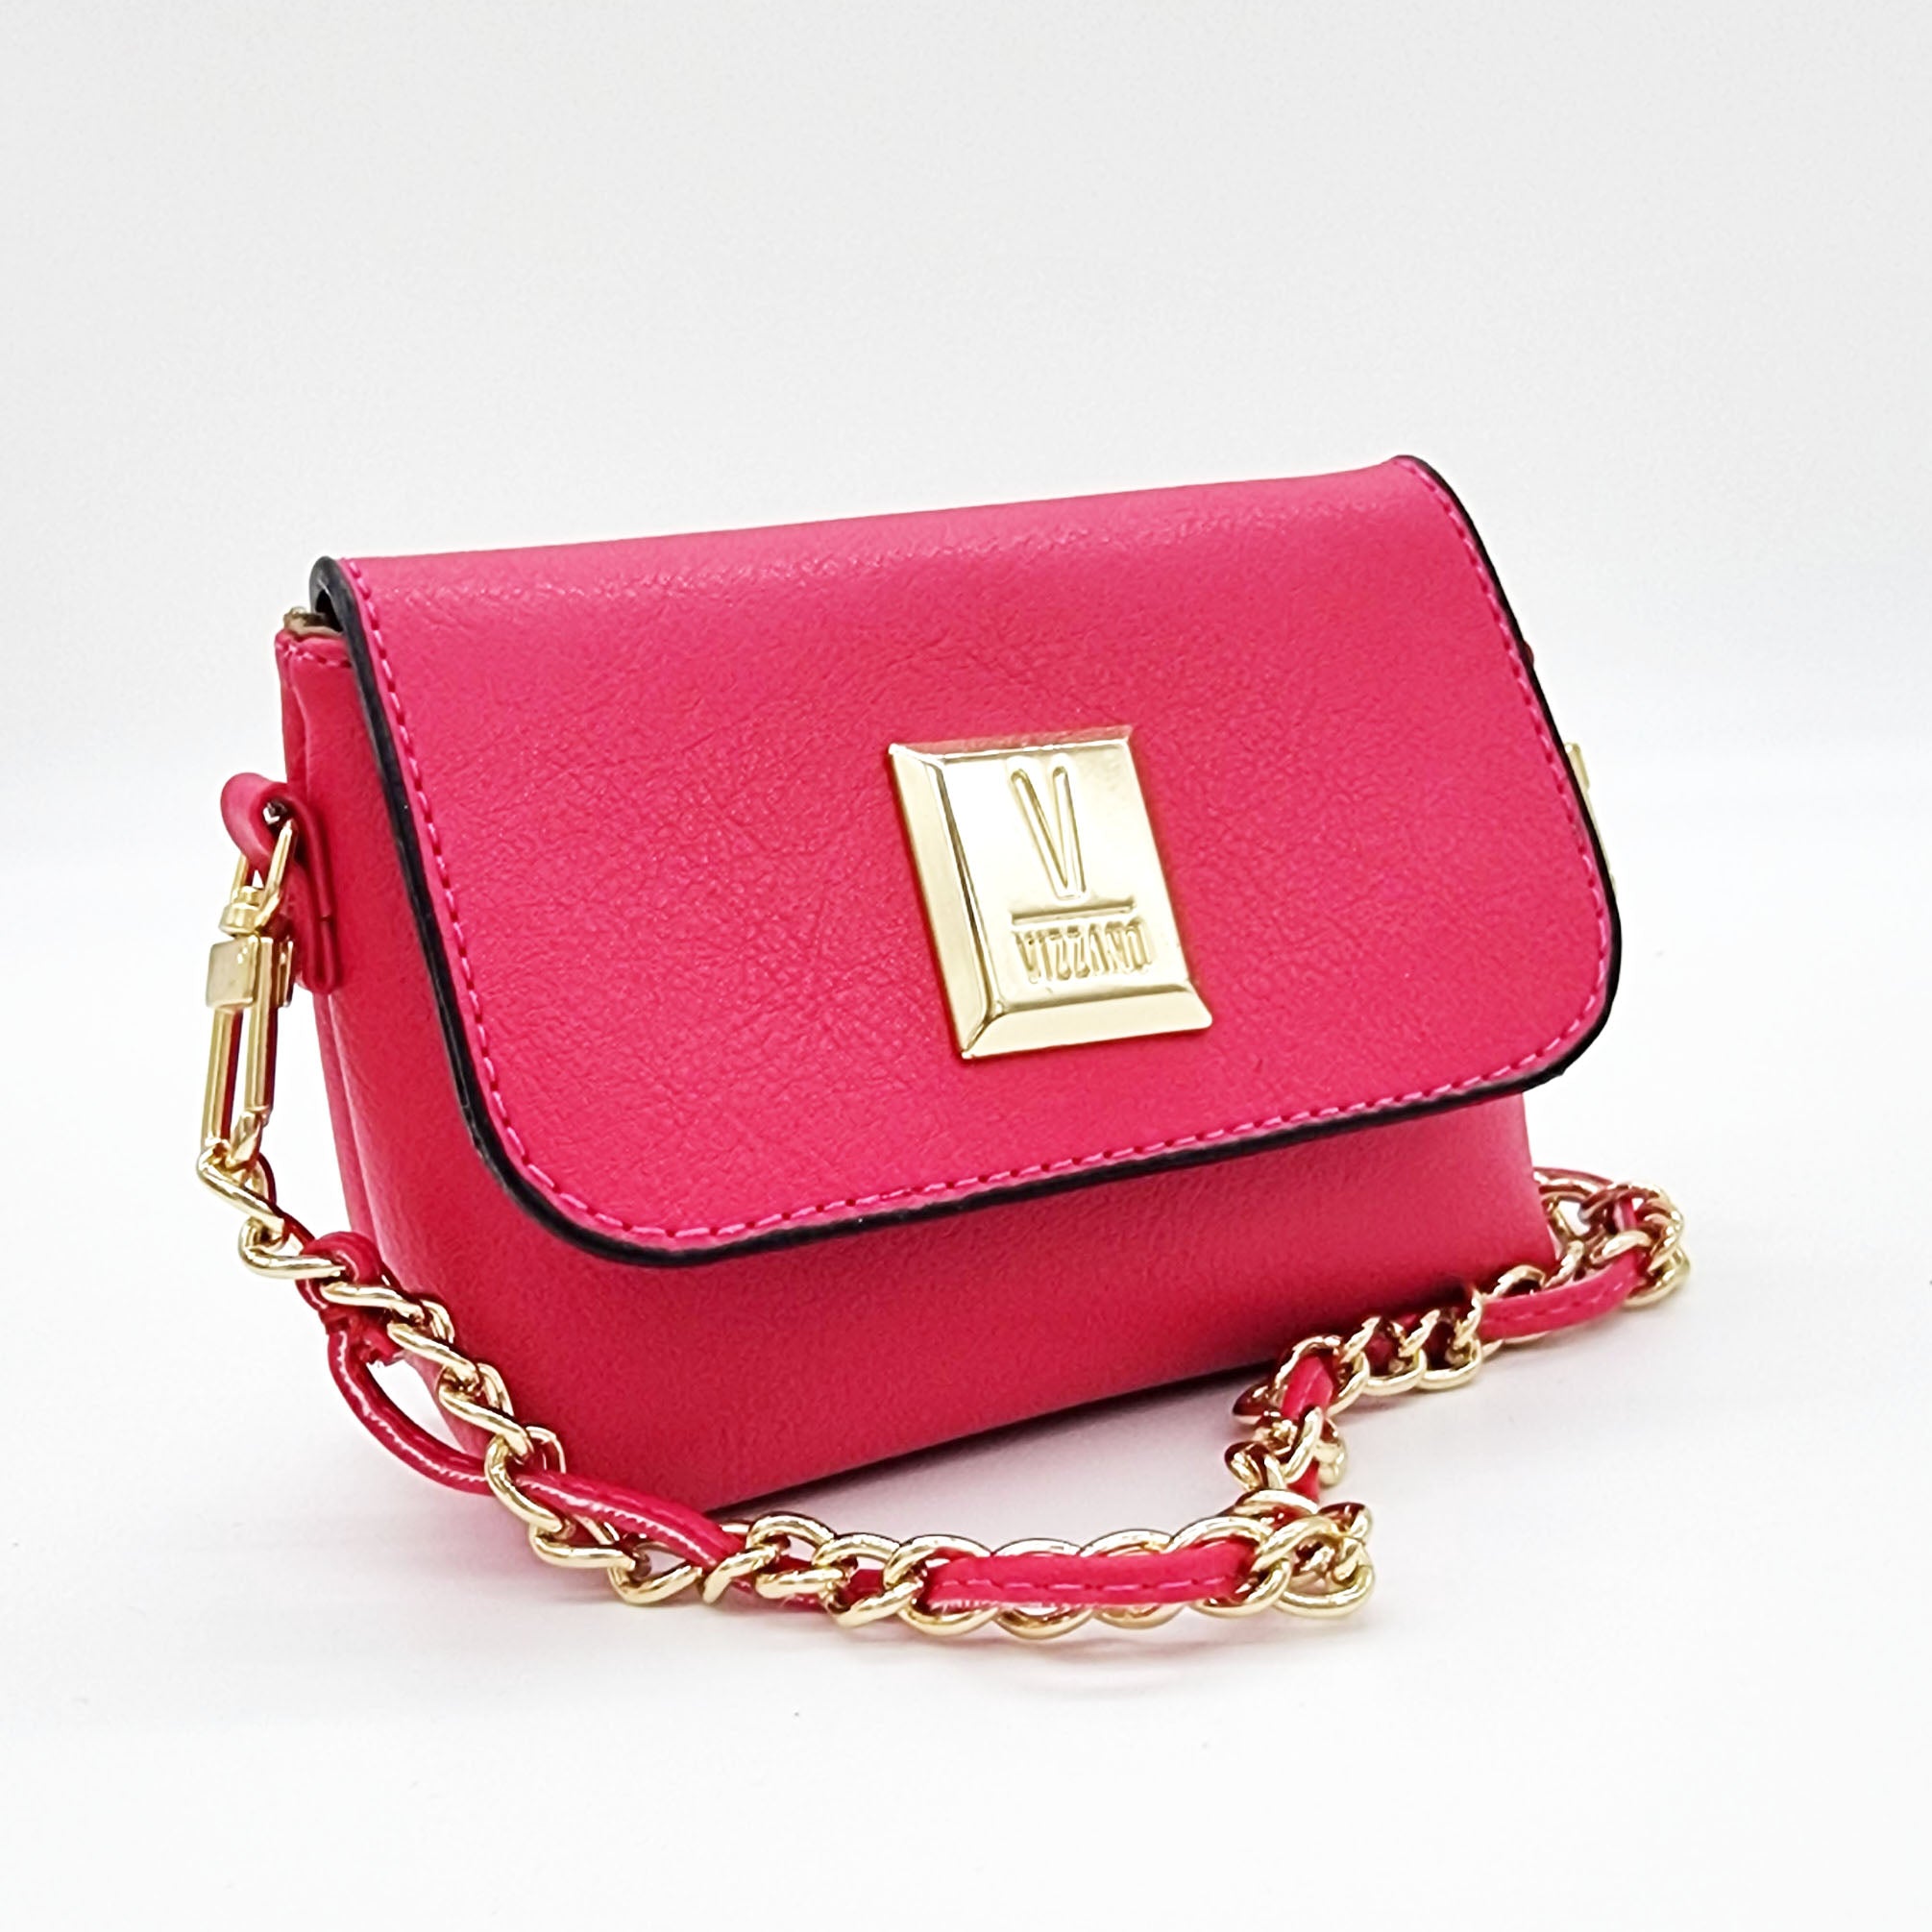 Vizzano 10047-1 Shoulder Bag in Pink Gloss